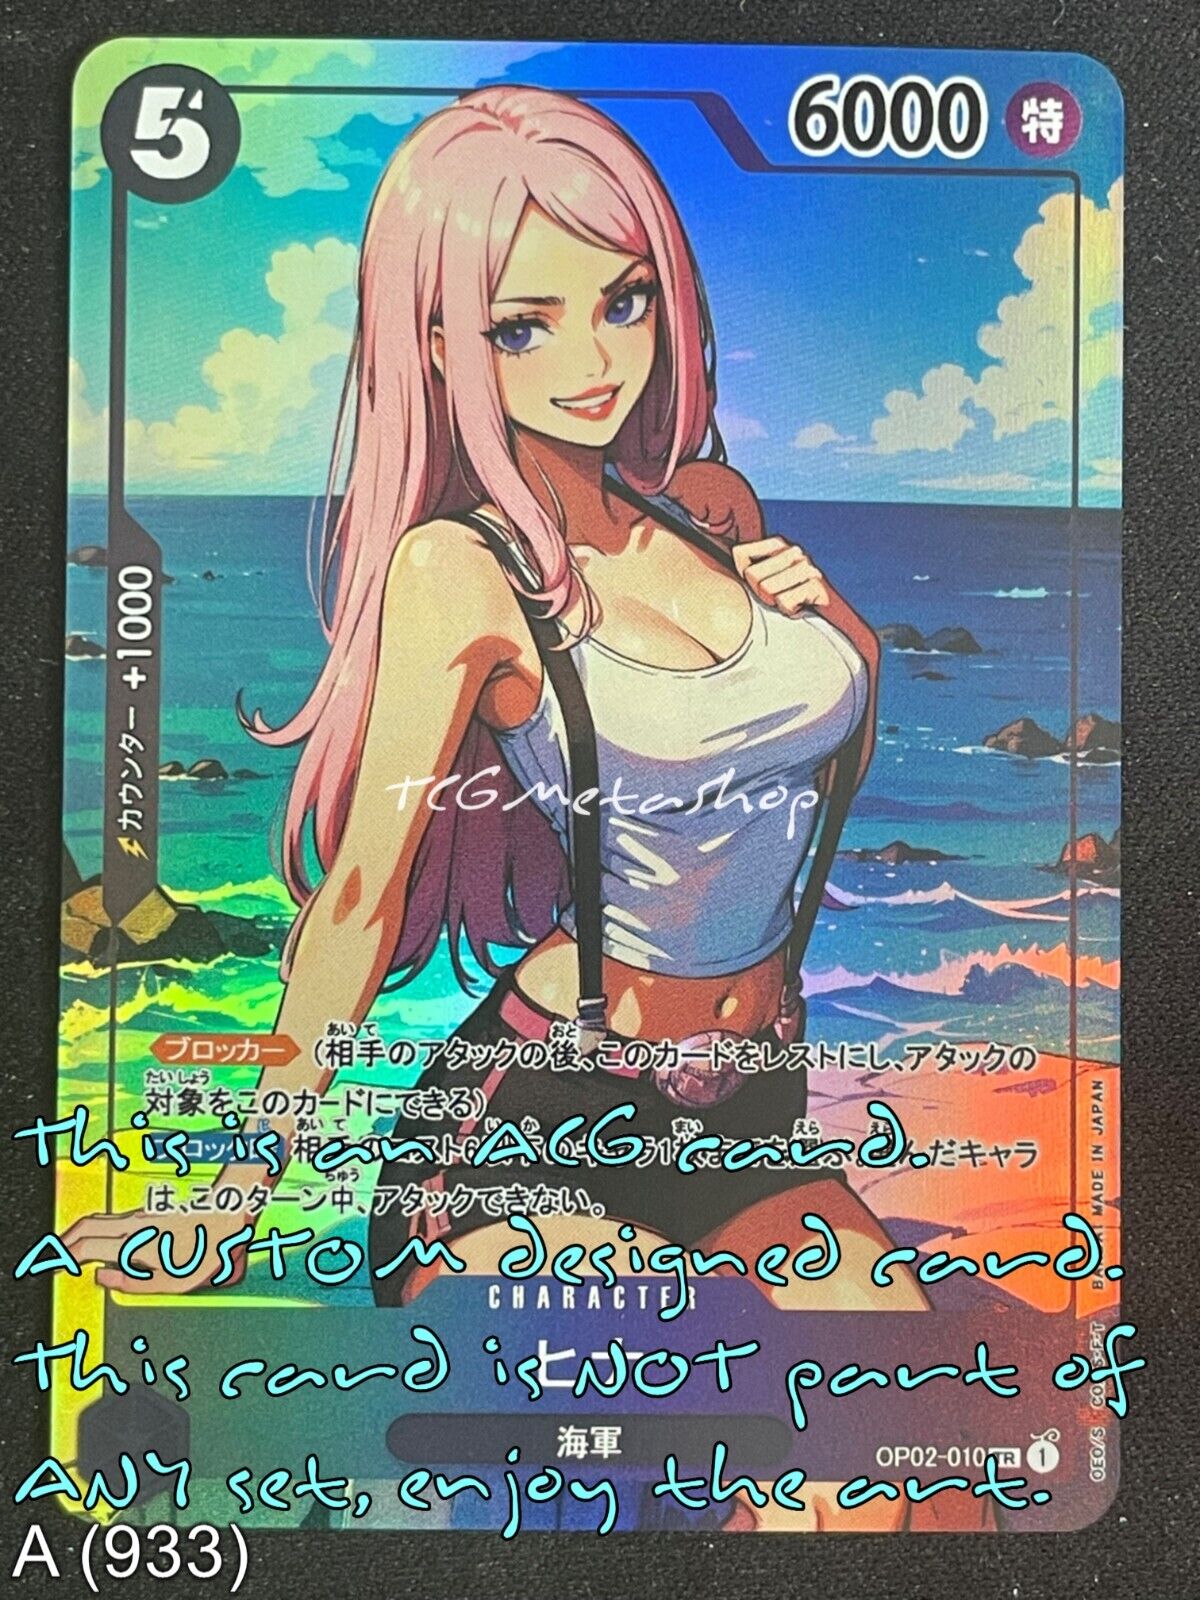 🔥 A 933 Jewelry Bonney One Piece Goddess Story Anime Waifu Card ACG 🔥